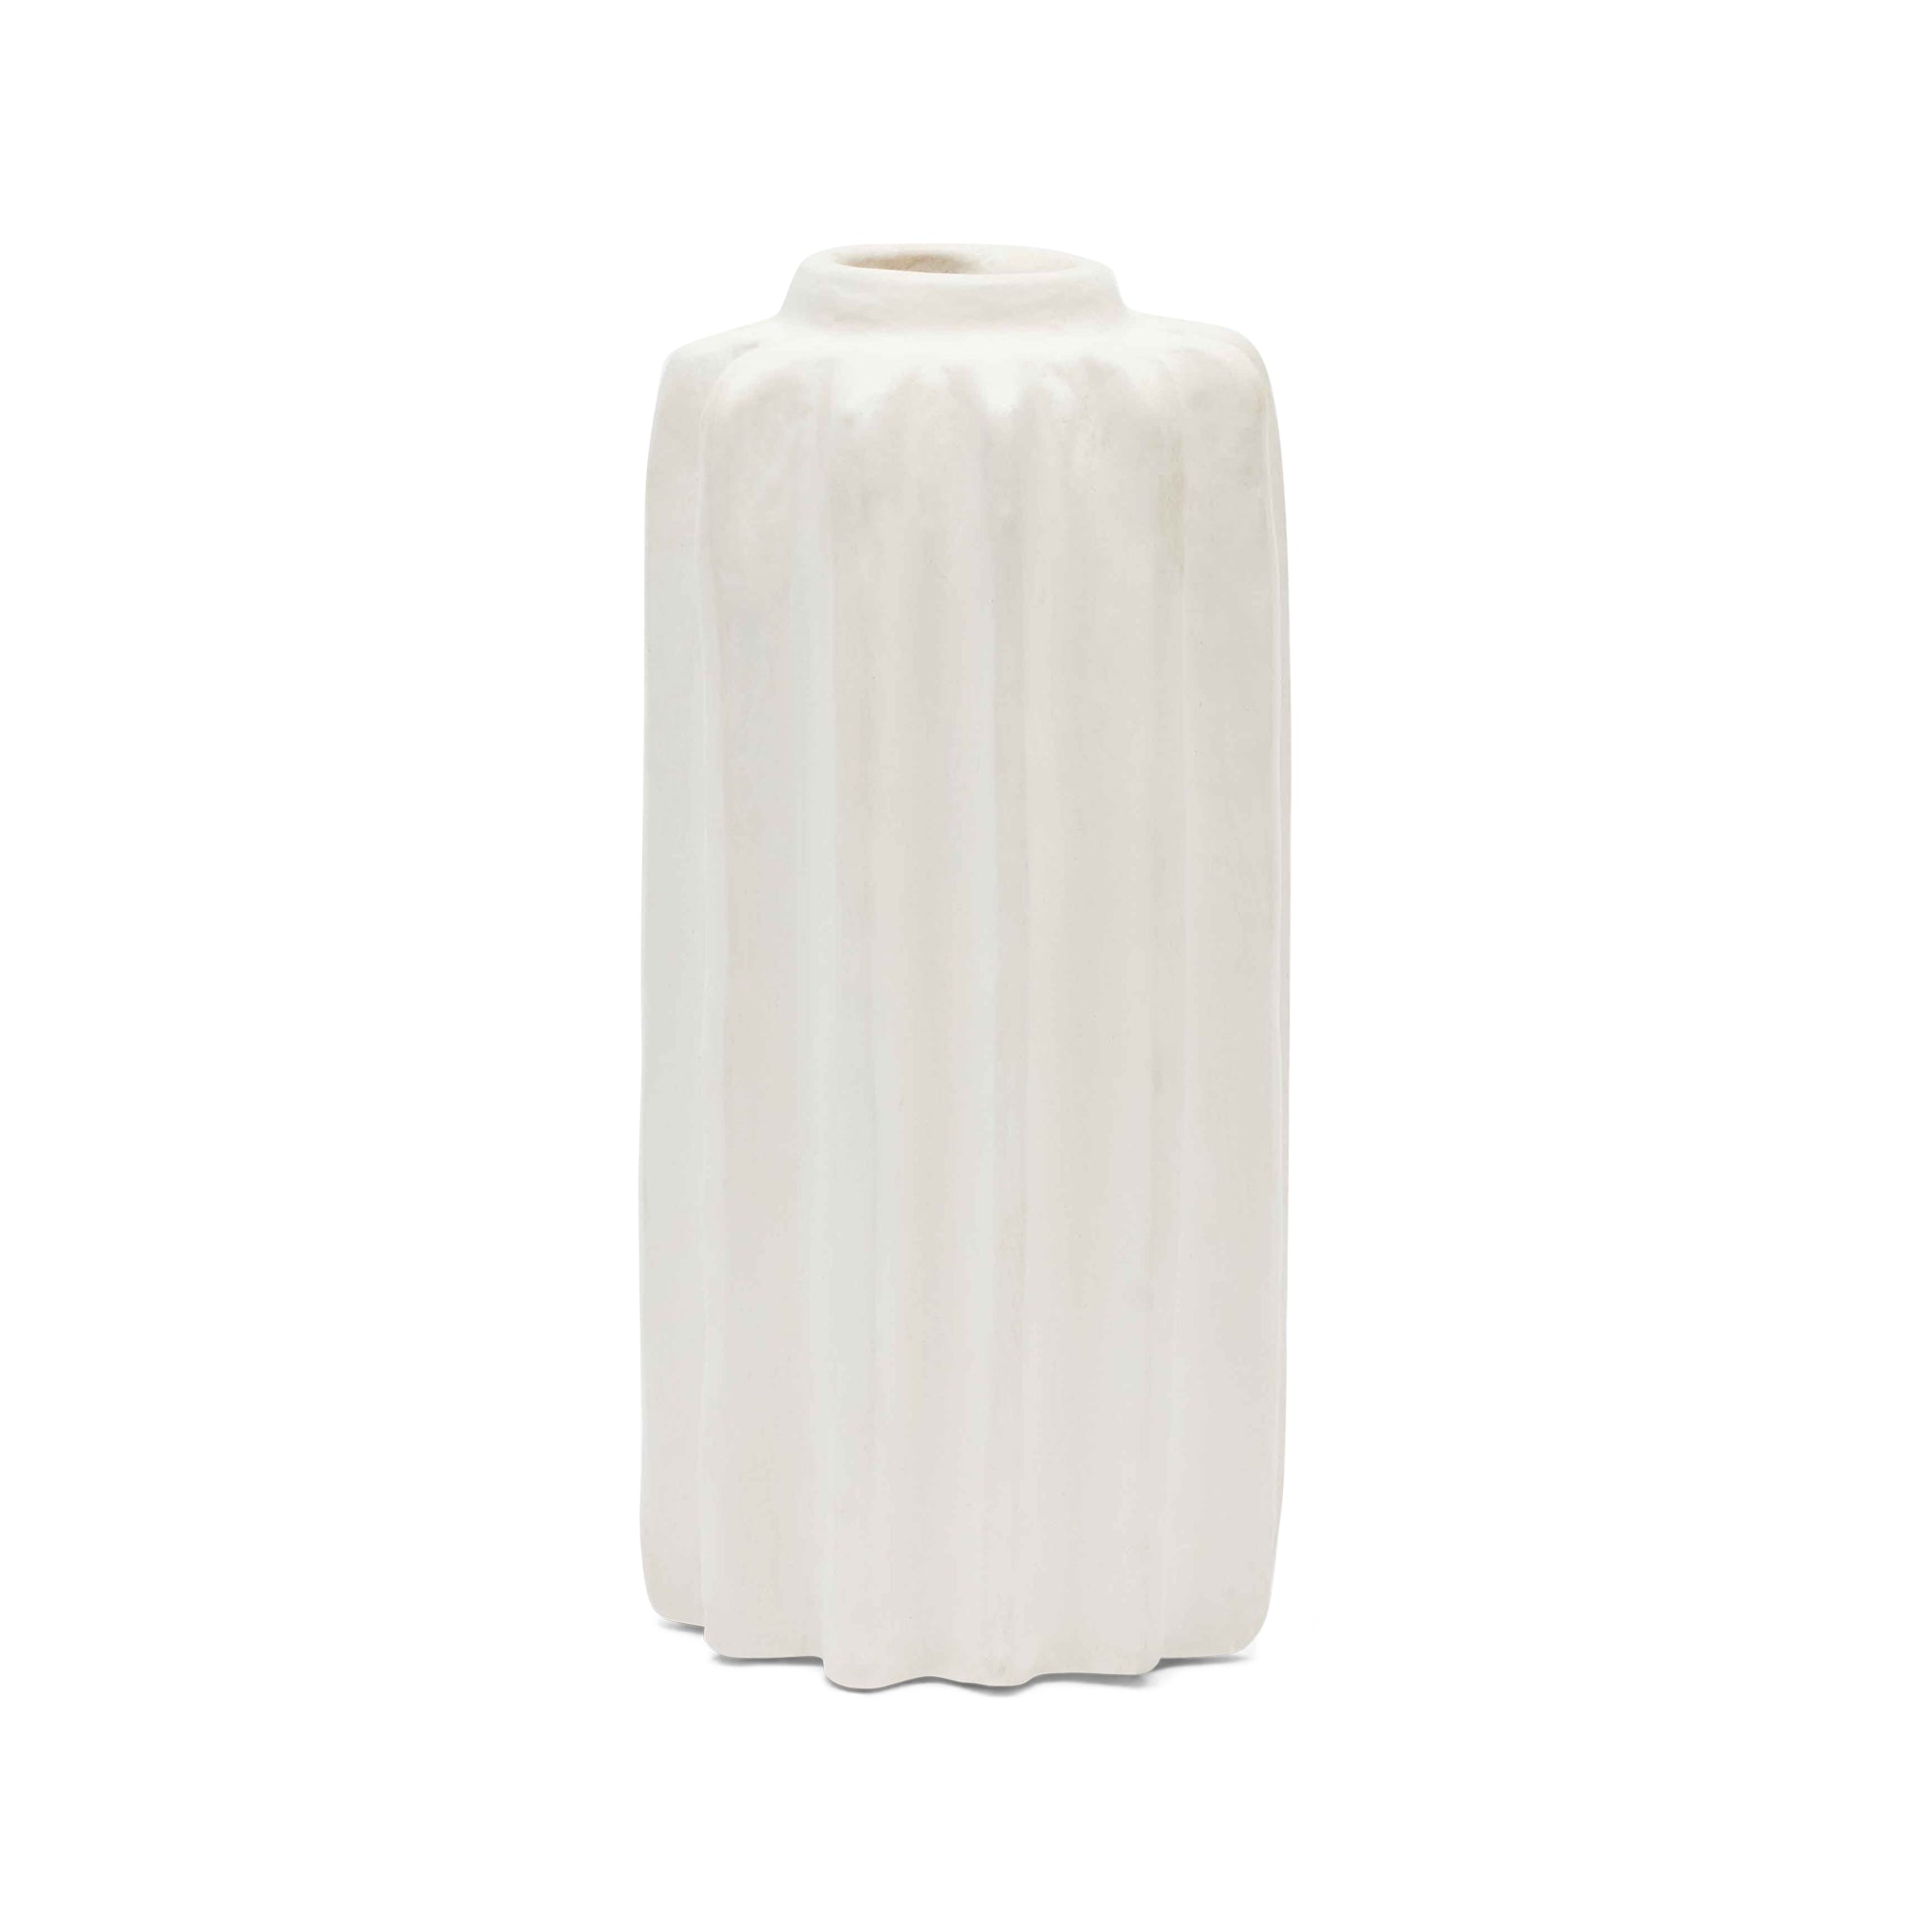 Ika Vase Small White